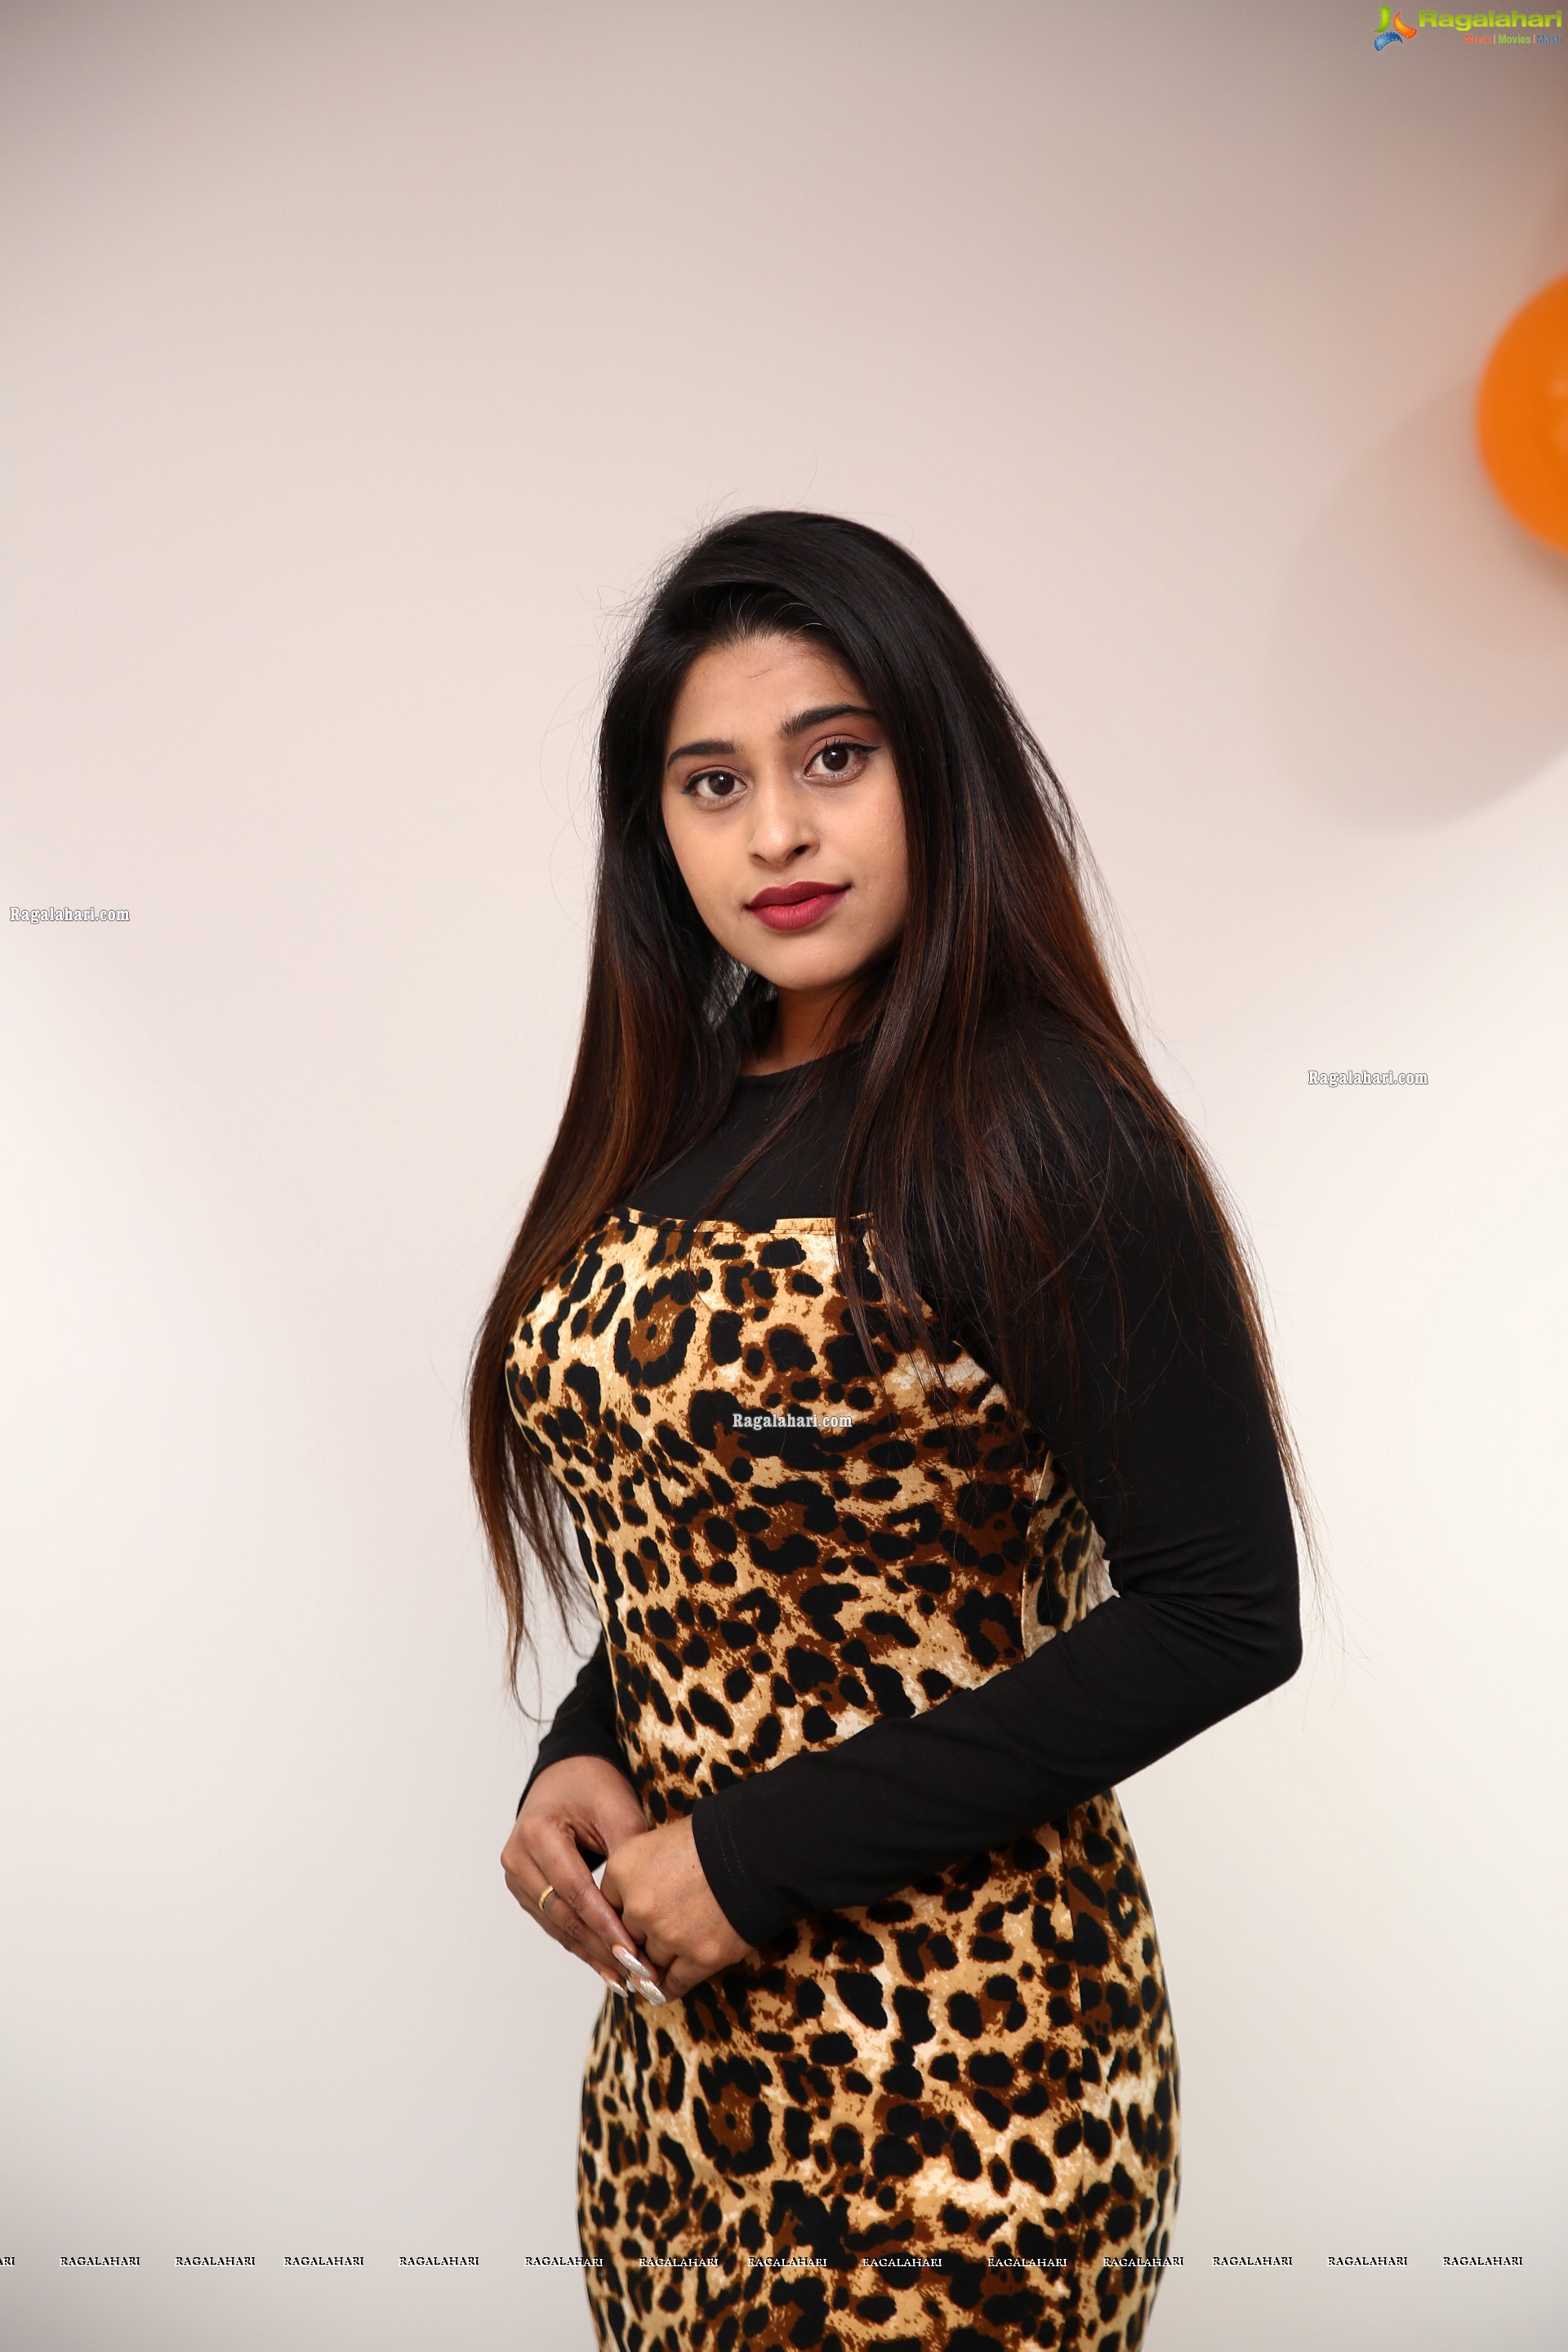 Shravani Varma in Cheetah Print Dress, HD Photo Gallery